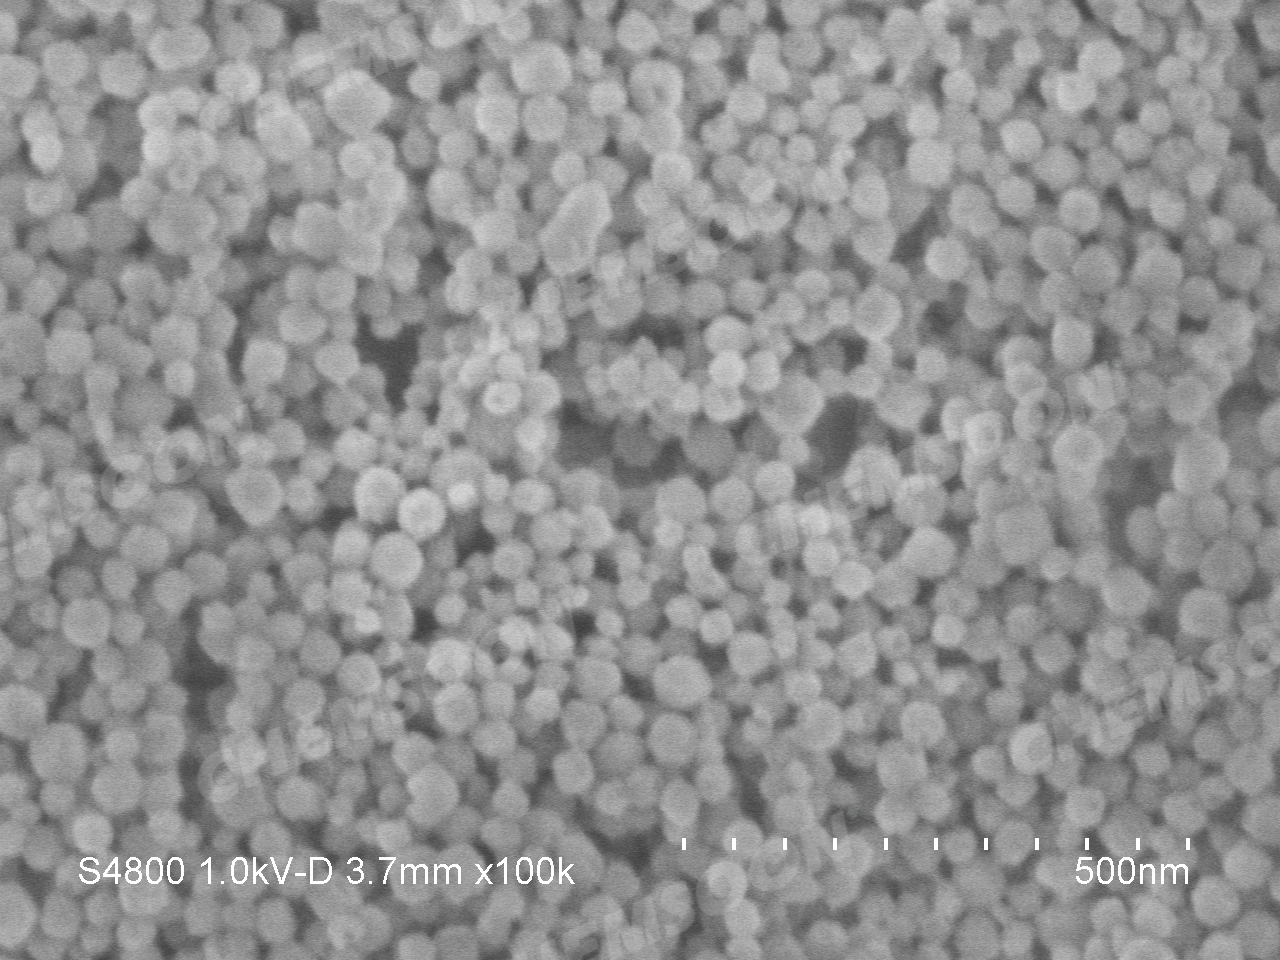 SEM-NH2-UIO-66 nanoparticle s